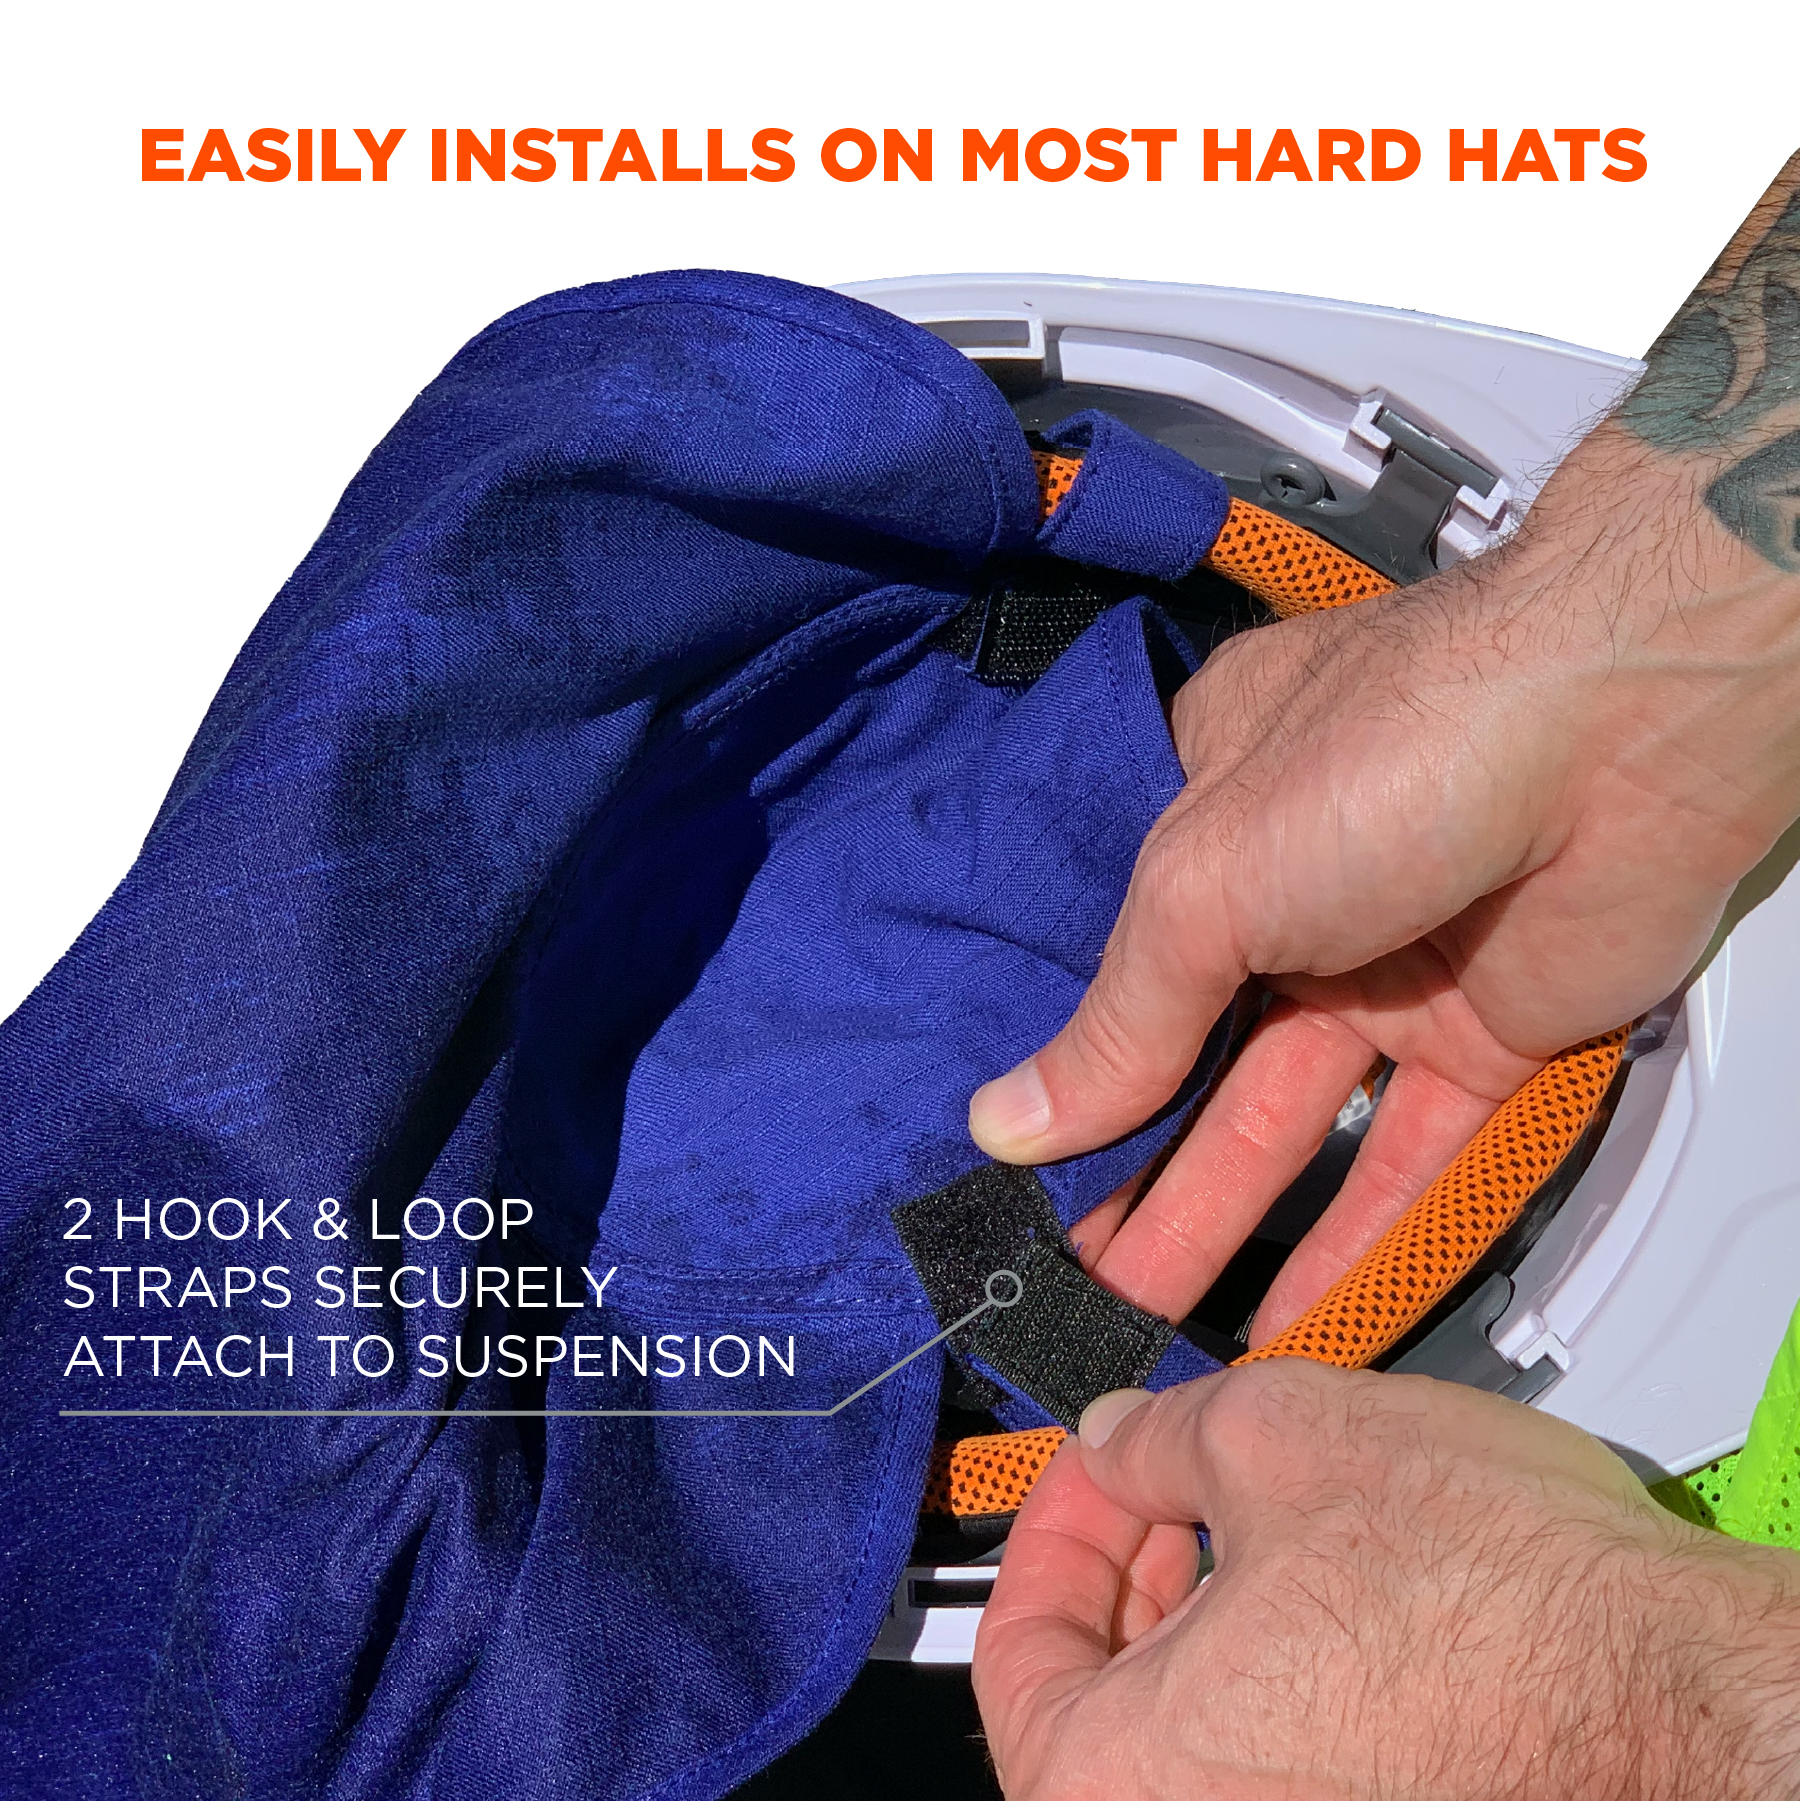 Cooling Pad Hard Hat Insert